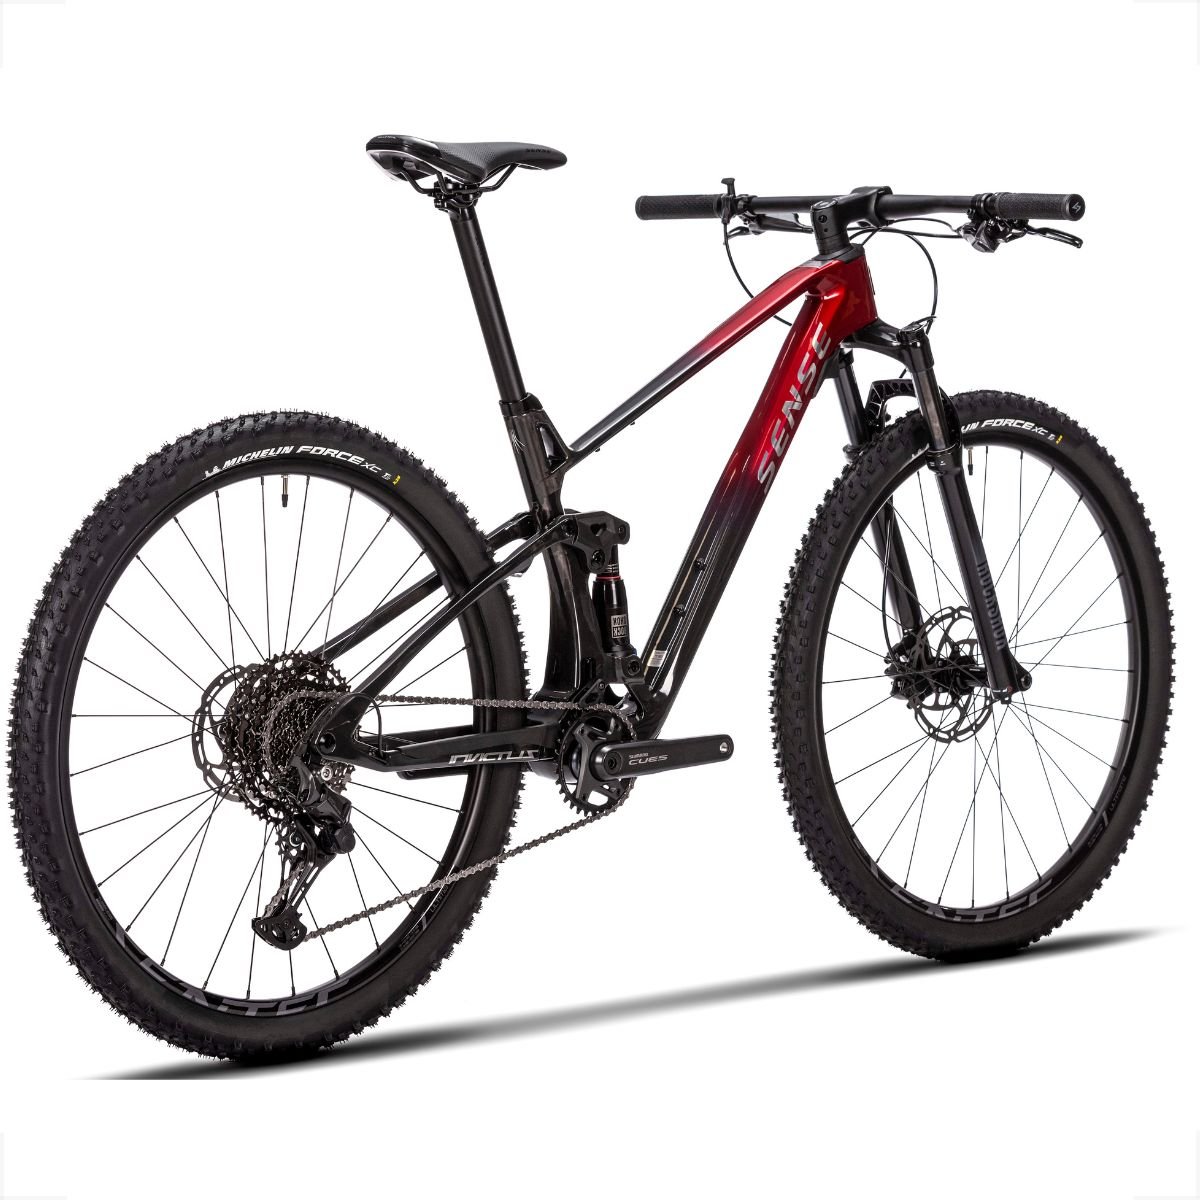 Bicicleta Full Sense Invictus Sport Carbono Shimano Cues:vermelho+preto/19 - 3